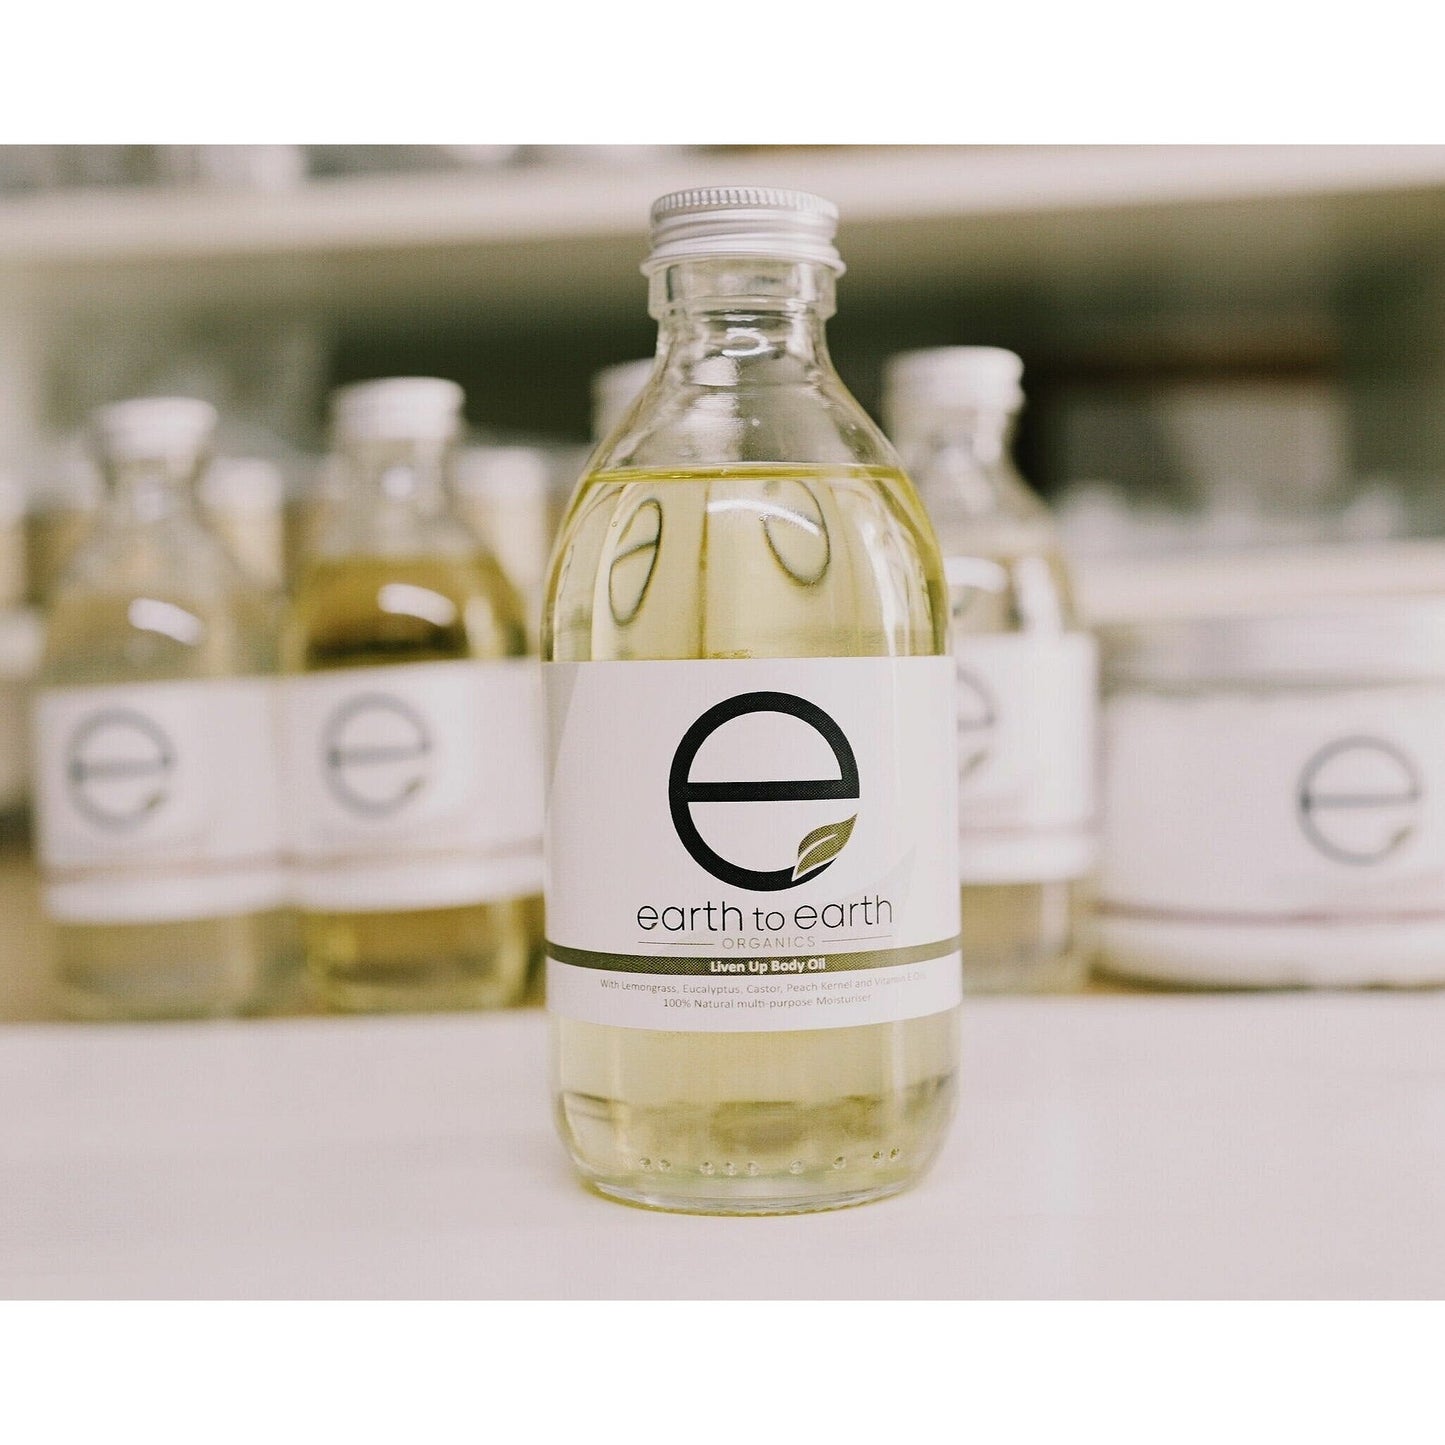 Eco-Friendly 3 in 1 Body Oil Set for Dry Skin